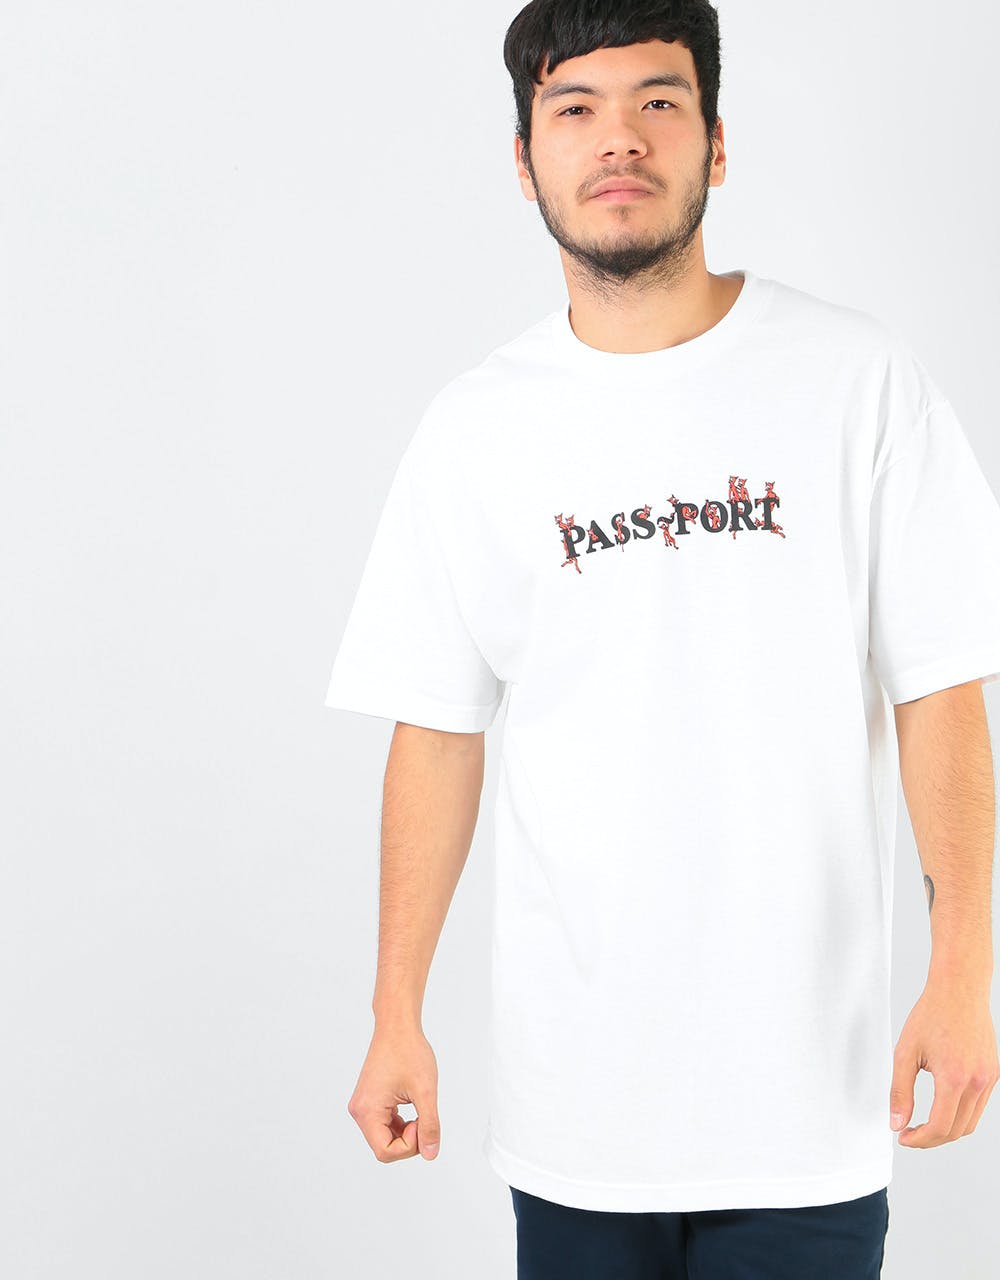 Pass Port Conscience T-Shirt - White